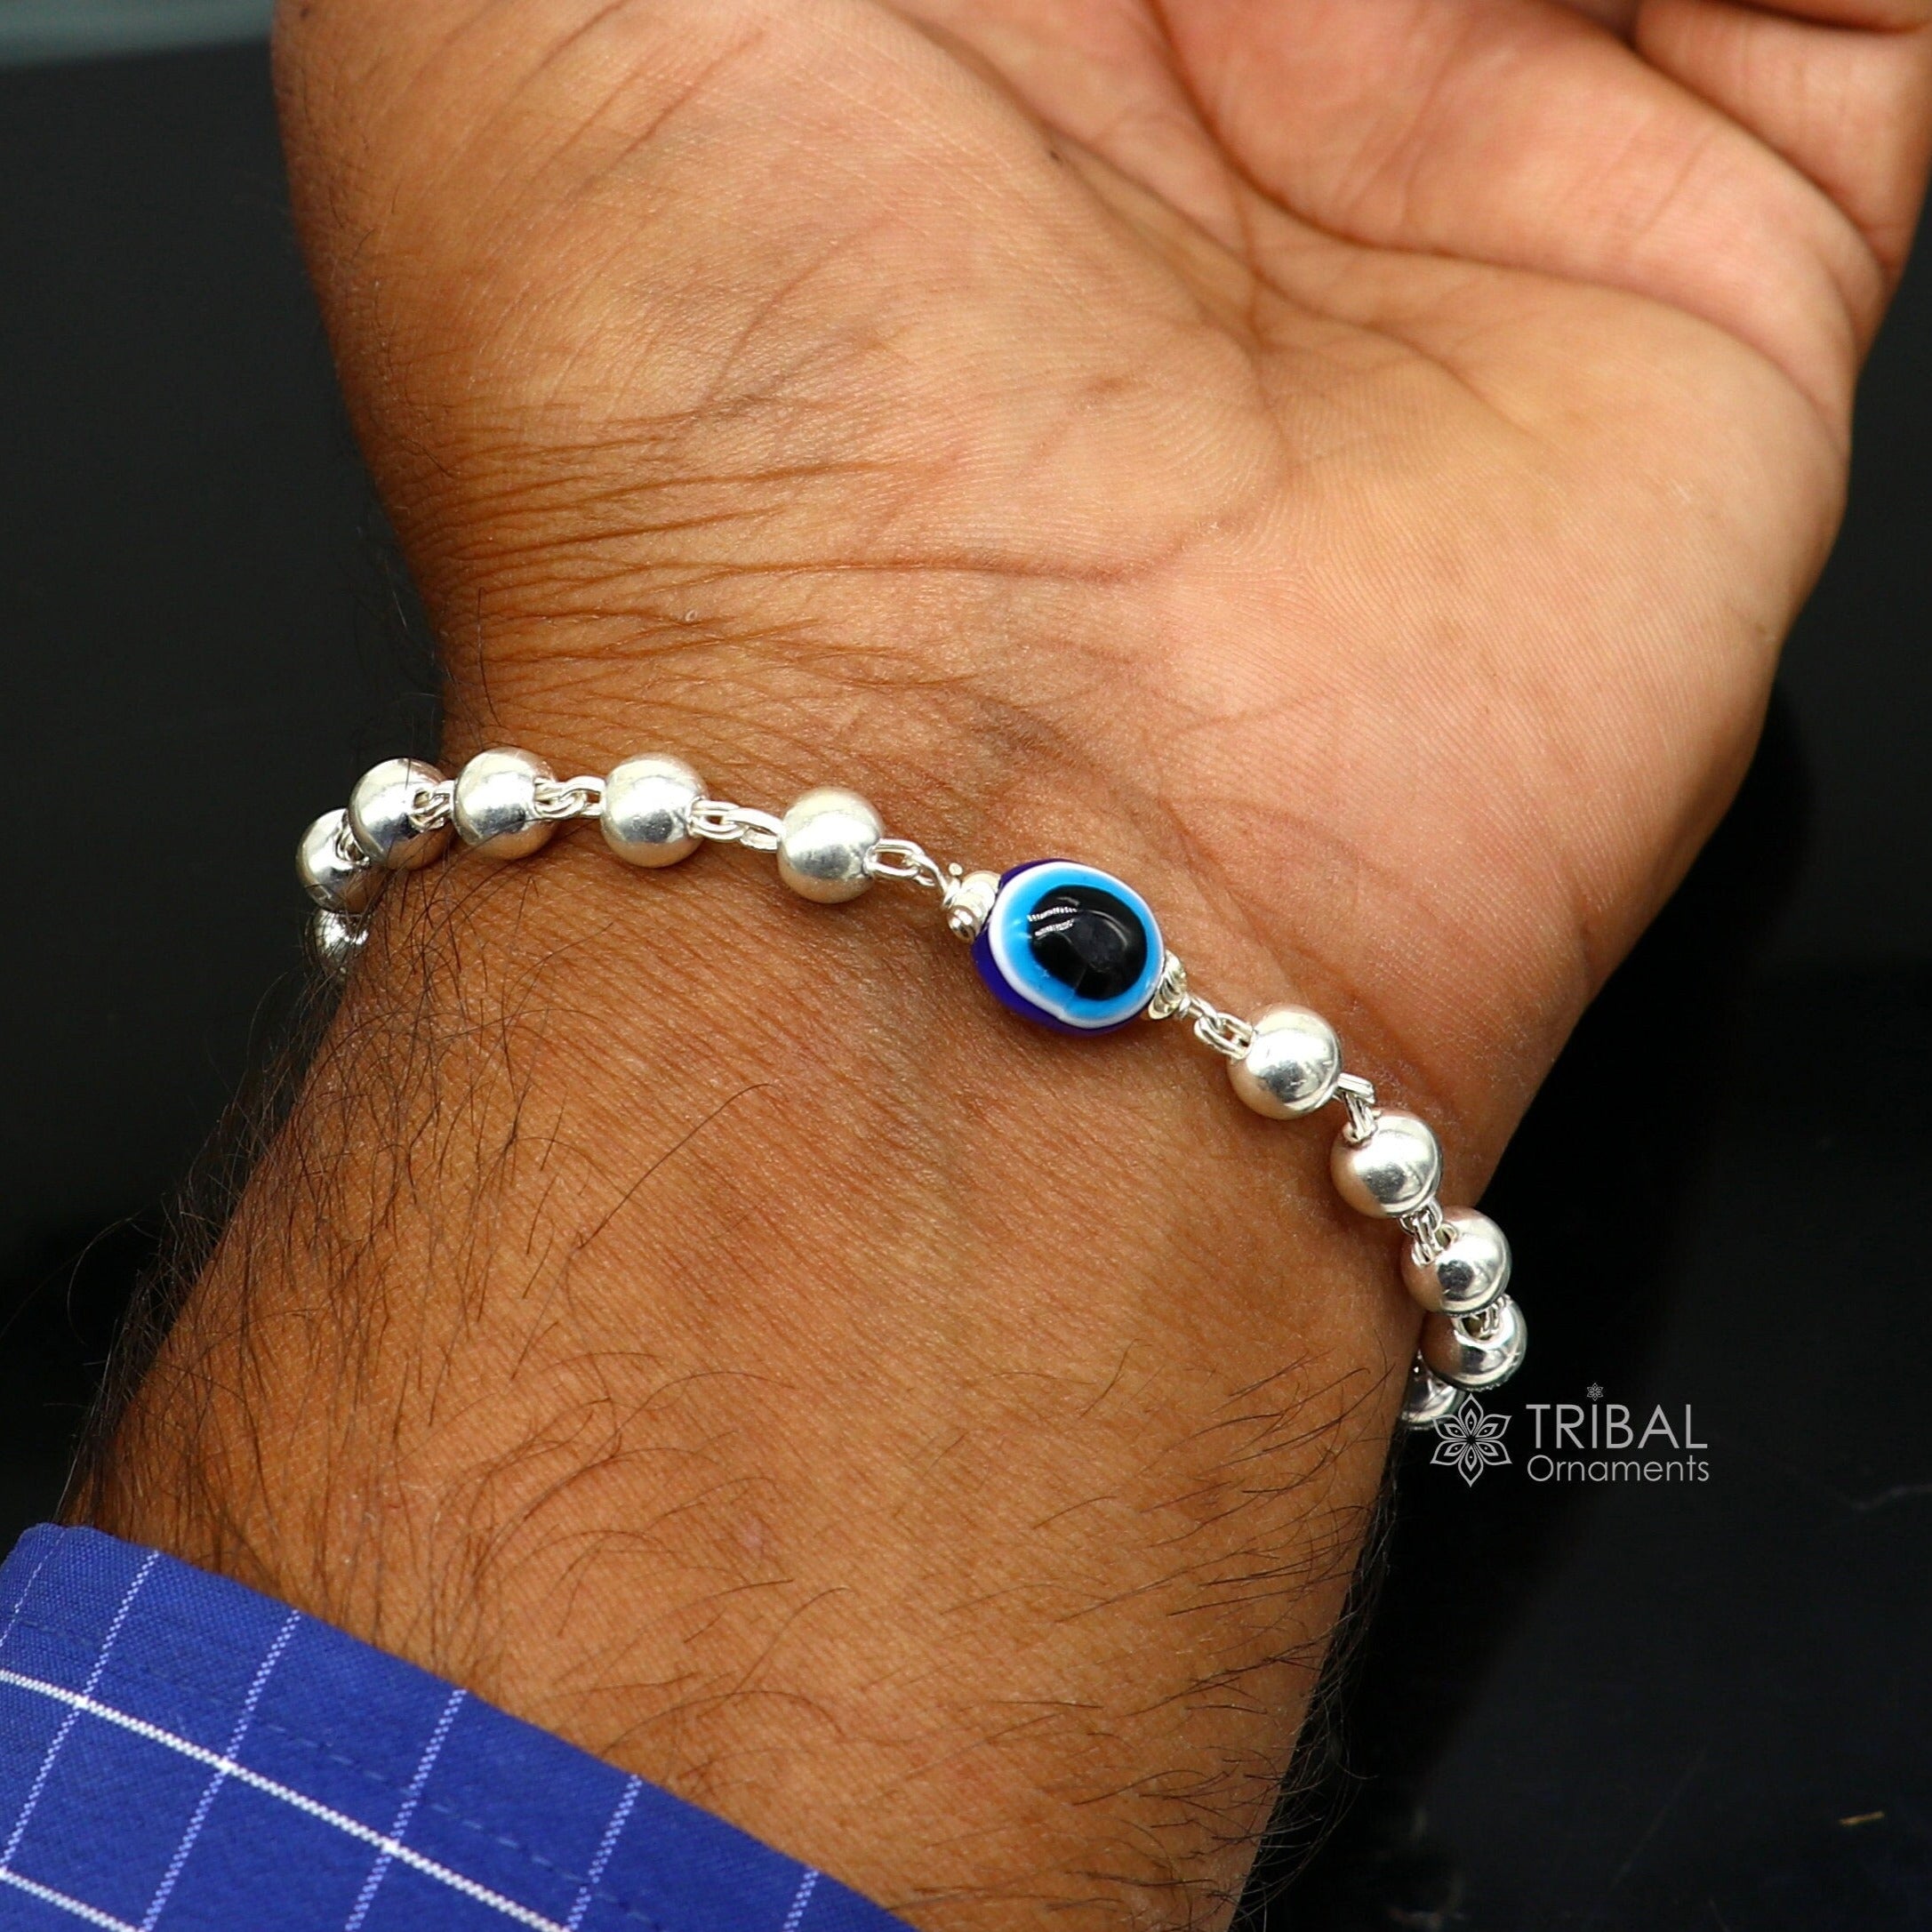 Buy quality 925 sterling silver evil eye bracelet in Ahmedabad